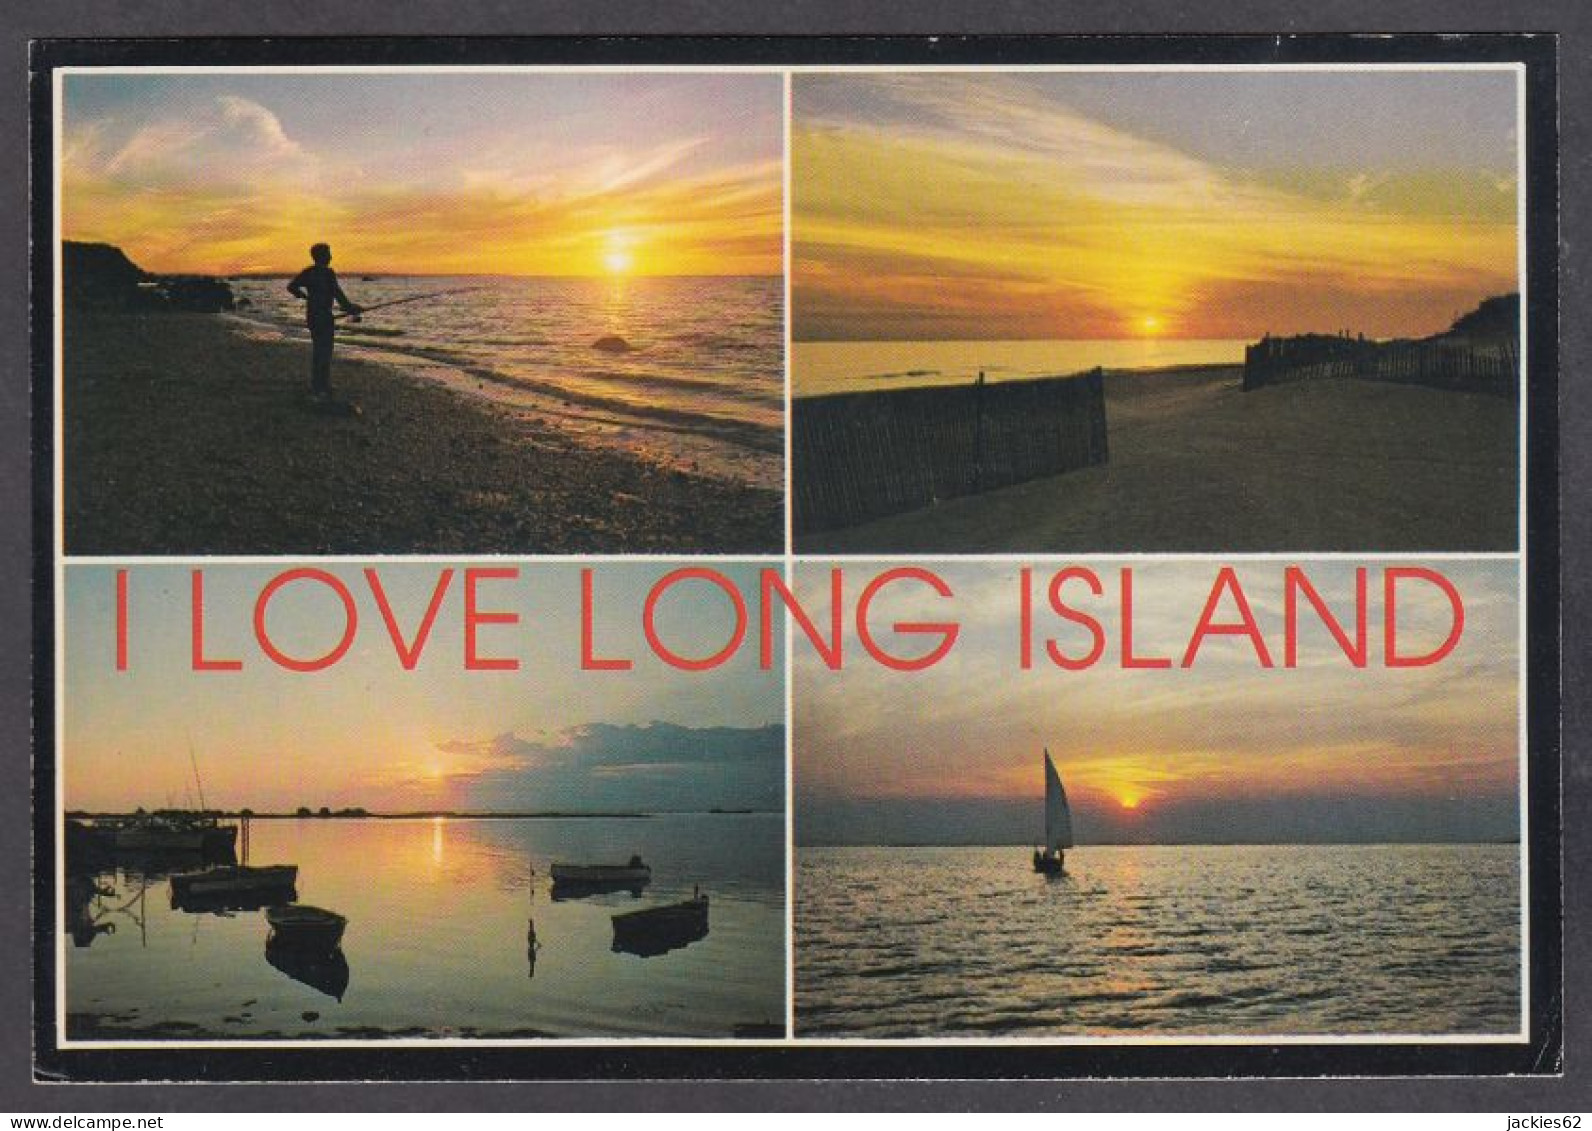 127669/ LONG ISLAND - Long Island